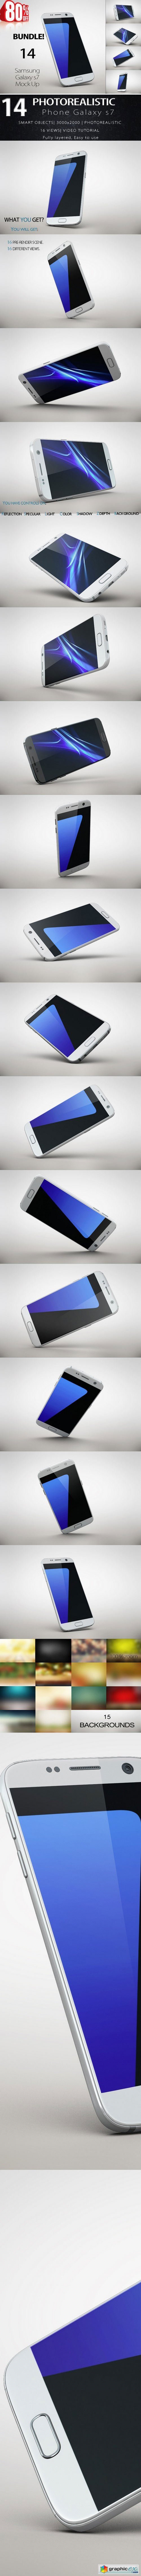 Bundle Samsung Galaxy s7 MockUp